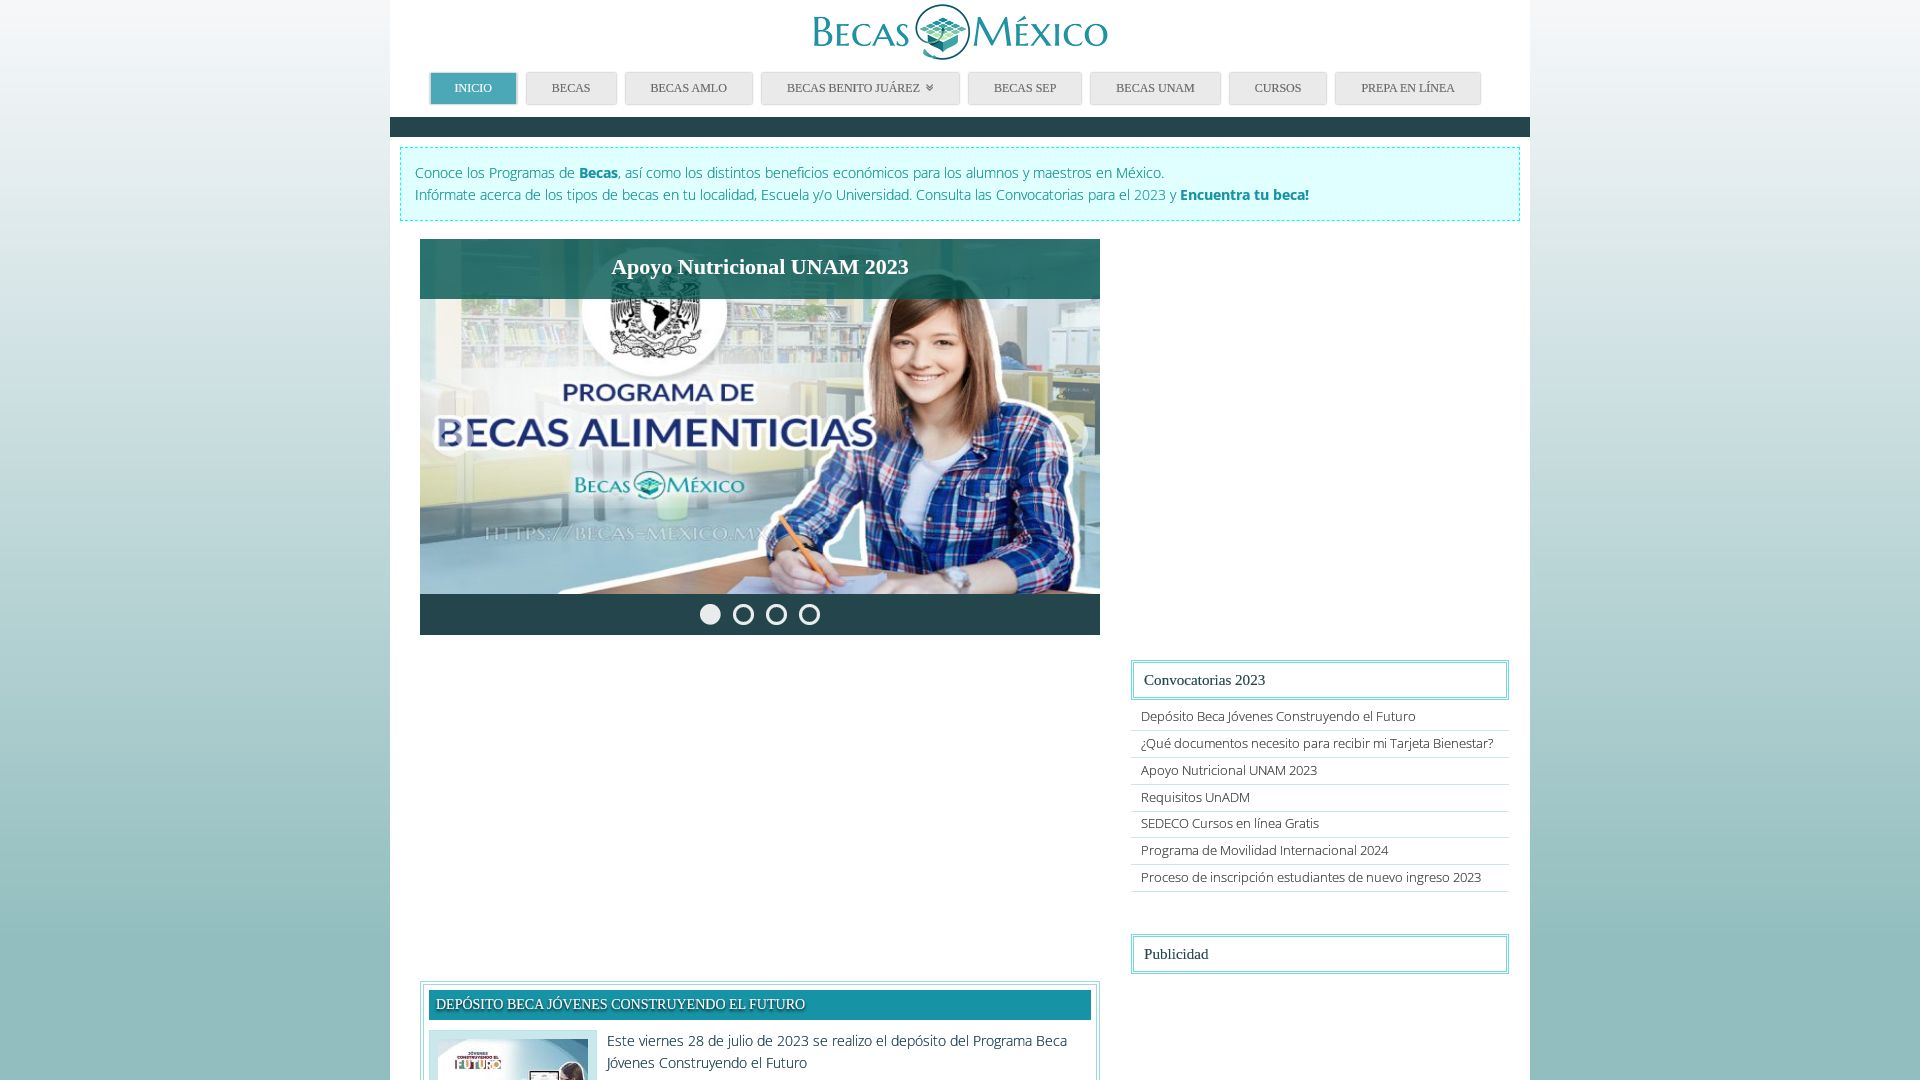 Website status becas-mexico.mx is   ONLINE